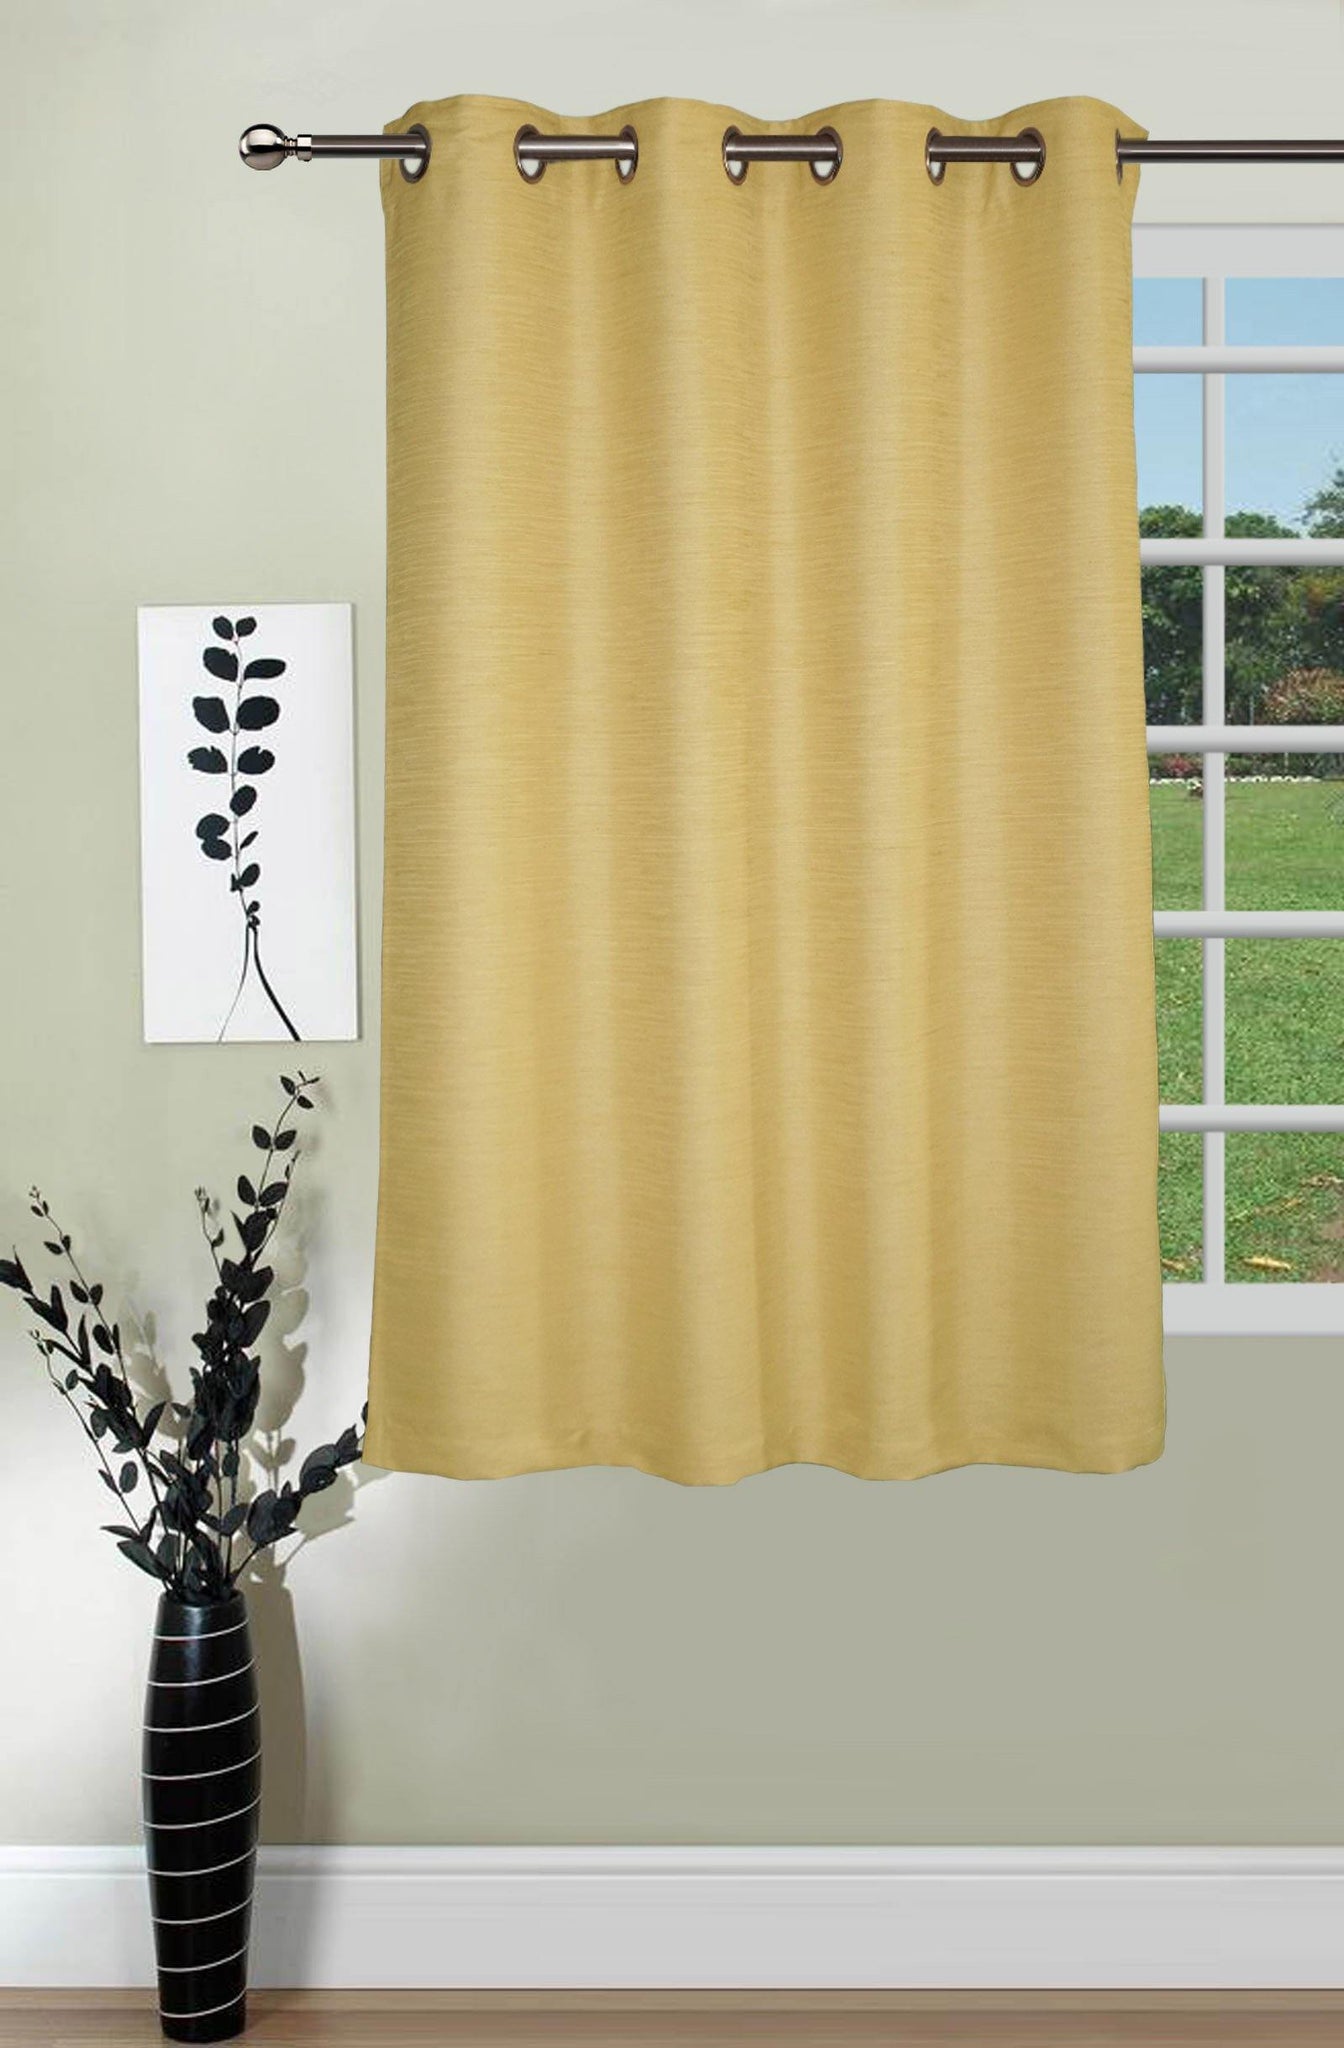 Lushomes Matka Silk Beige Curtain for Window (Single pc) - Lushomes